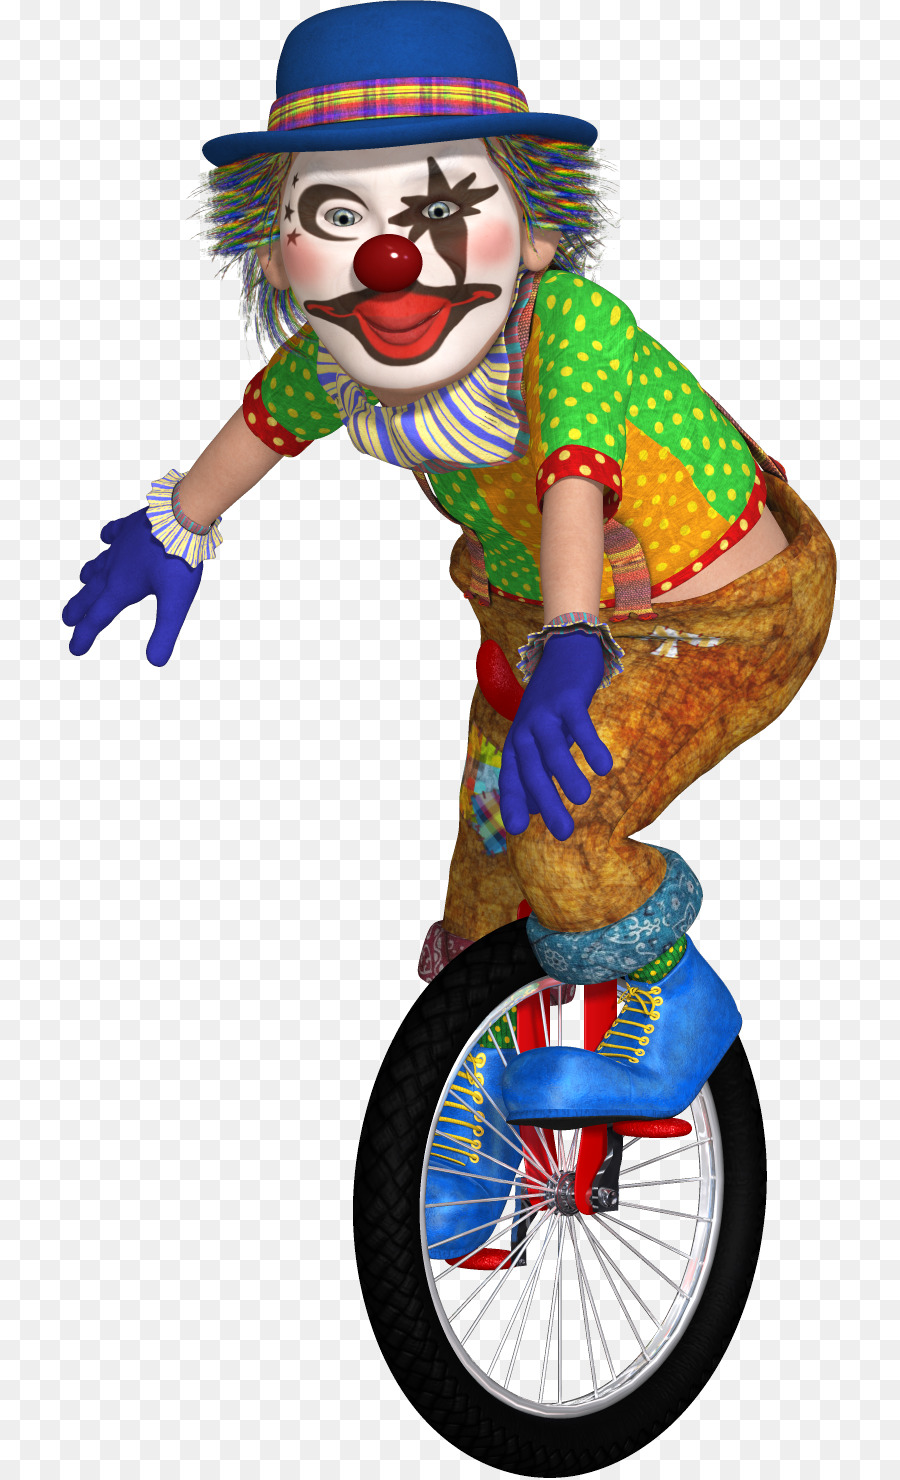 Clown Disegno Circo Cirque Joyeux Noel Rendering - clown